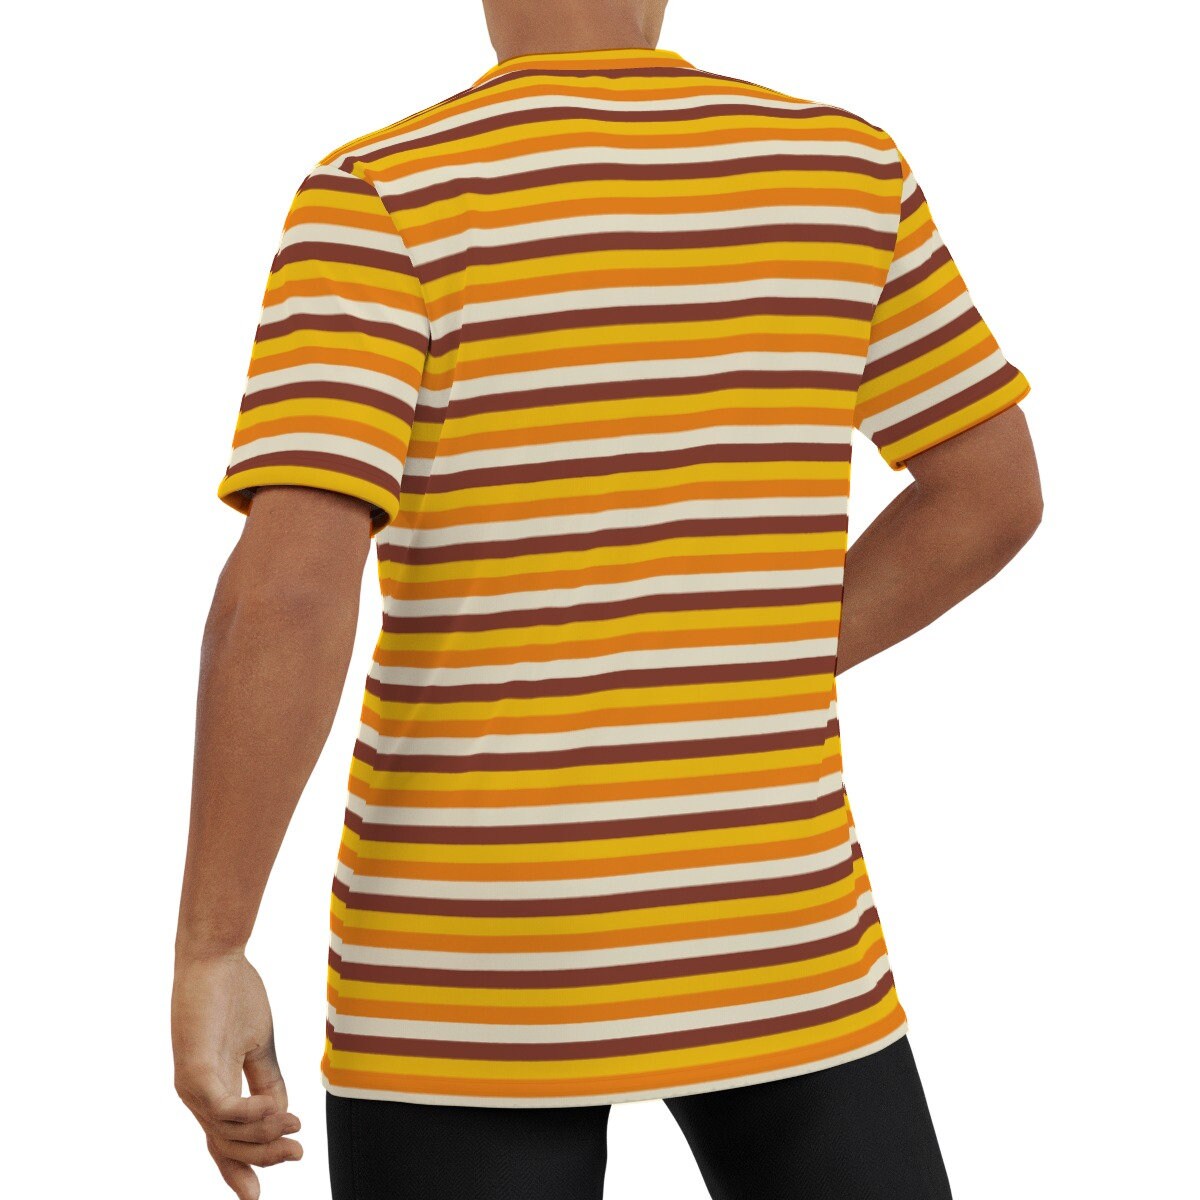 Eco friendly T-shirt, Retro T-shirt, Retro Top, Orange stripe T-shirt, 70s style shirt, Hippie Shirt, Groovy Shirt